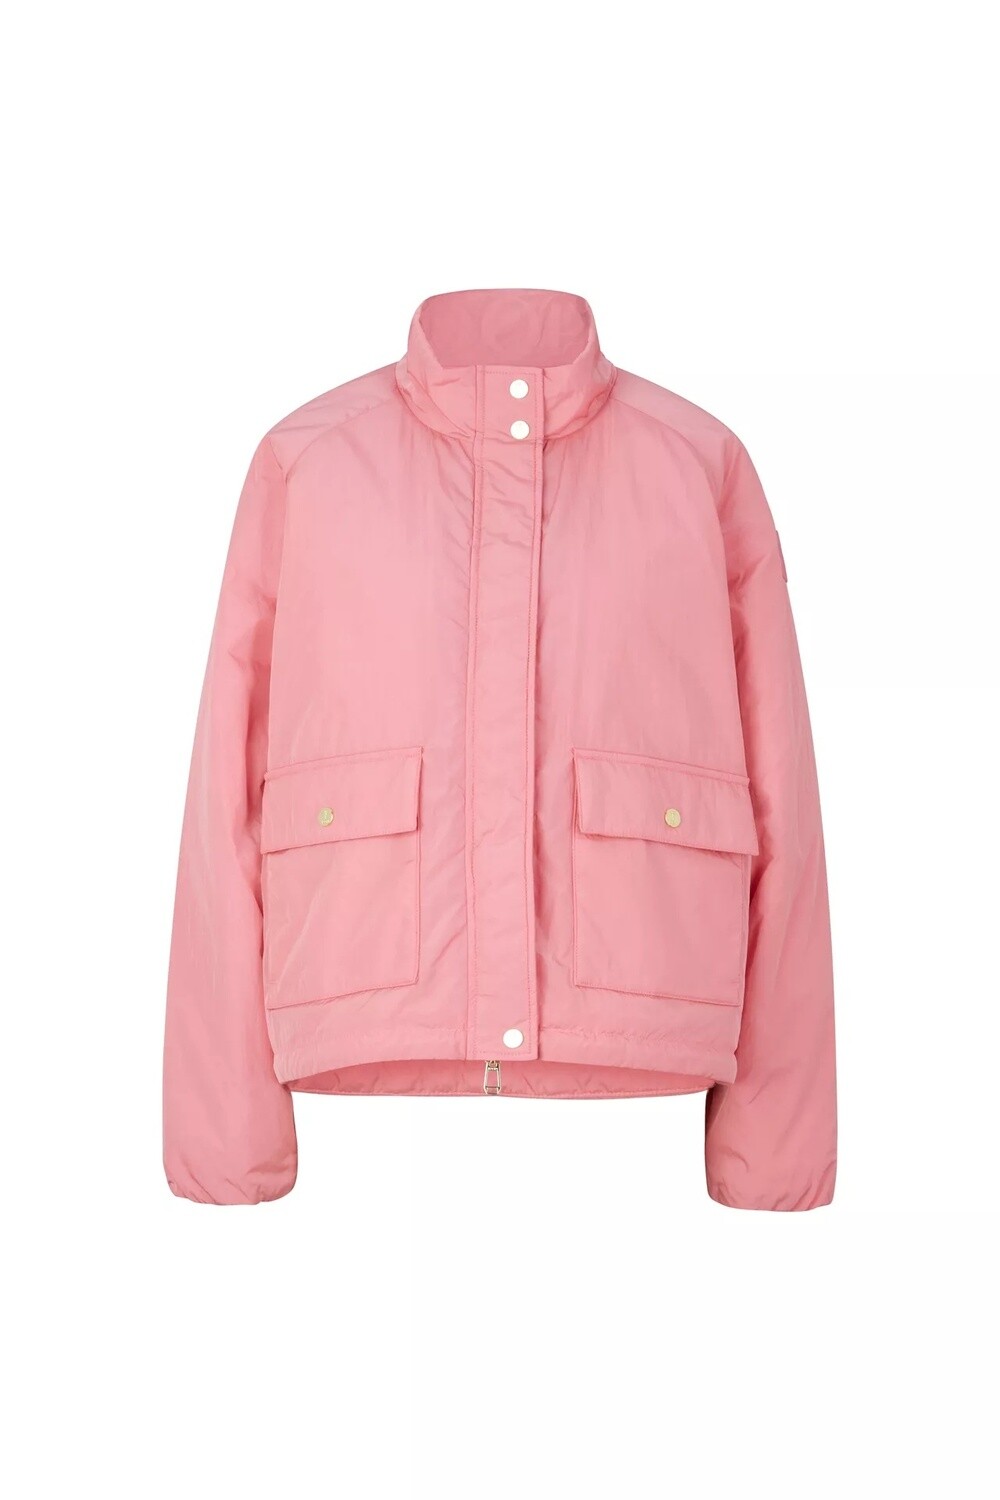 Joop Padded Jacket Bright Pink